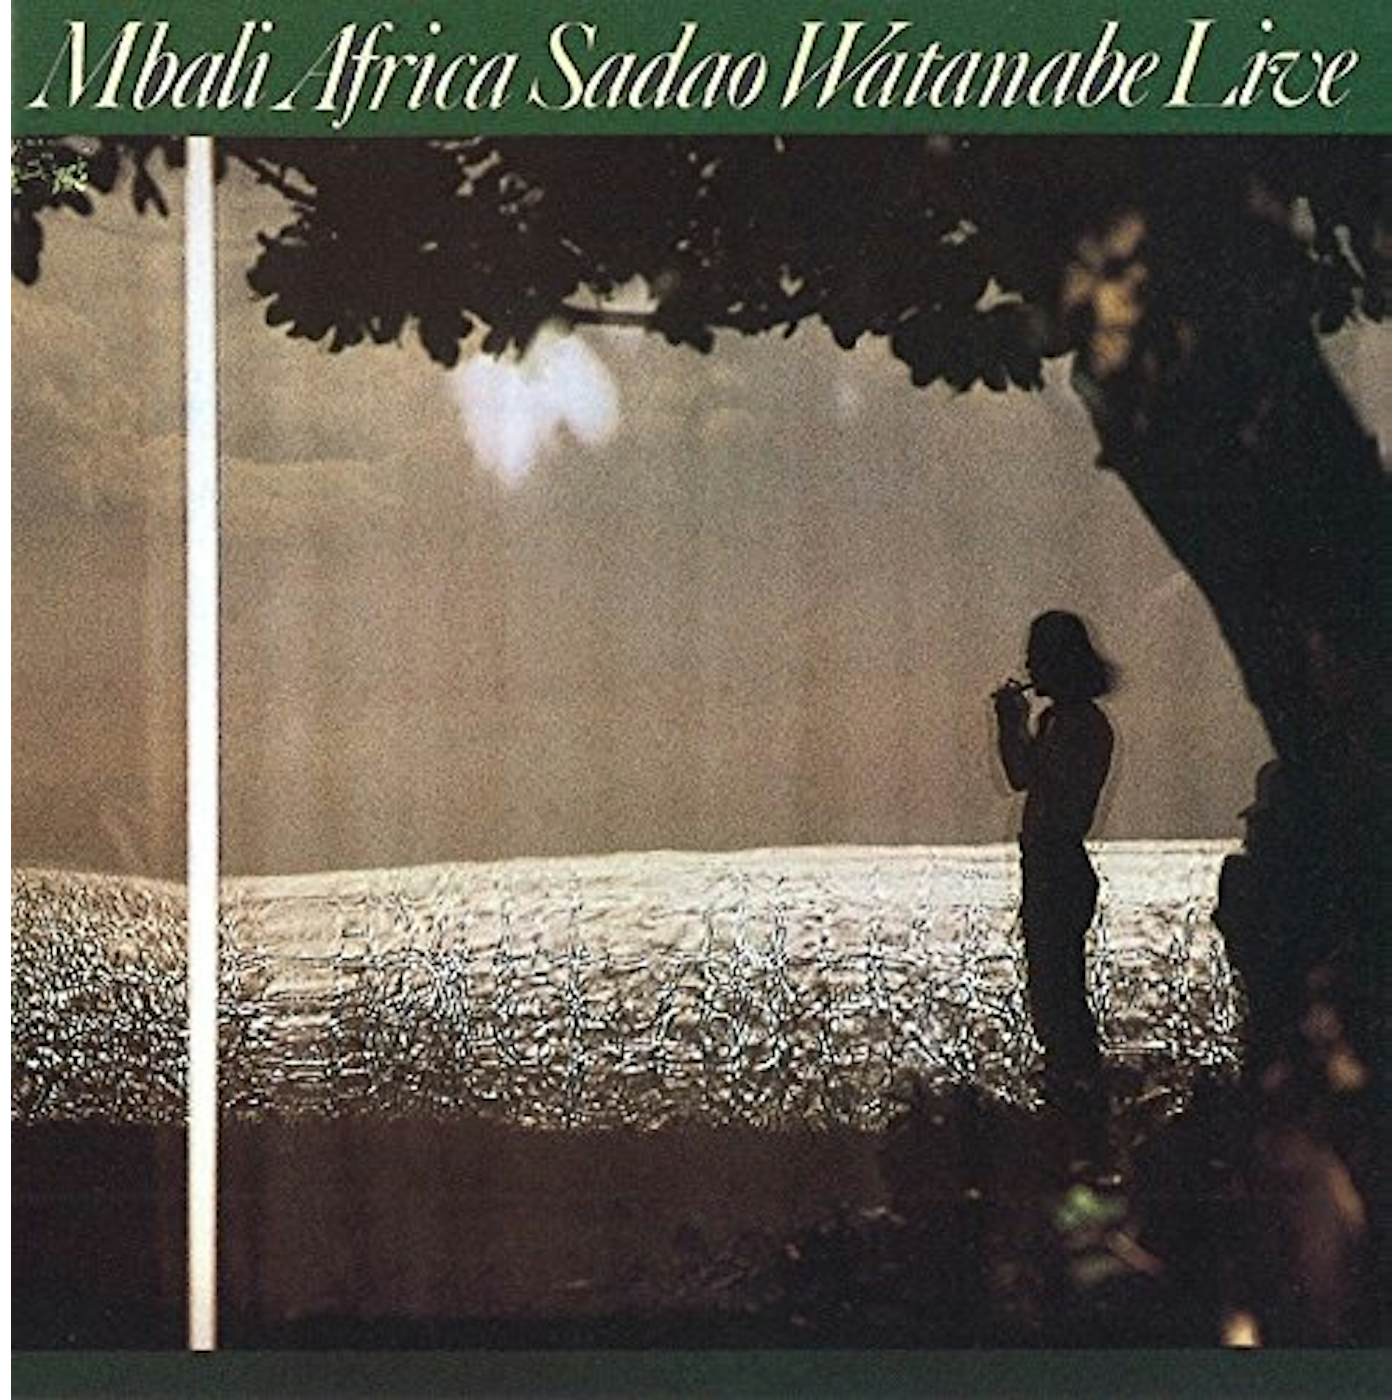 Sadao Watanabe MBALI AFRICA CD